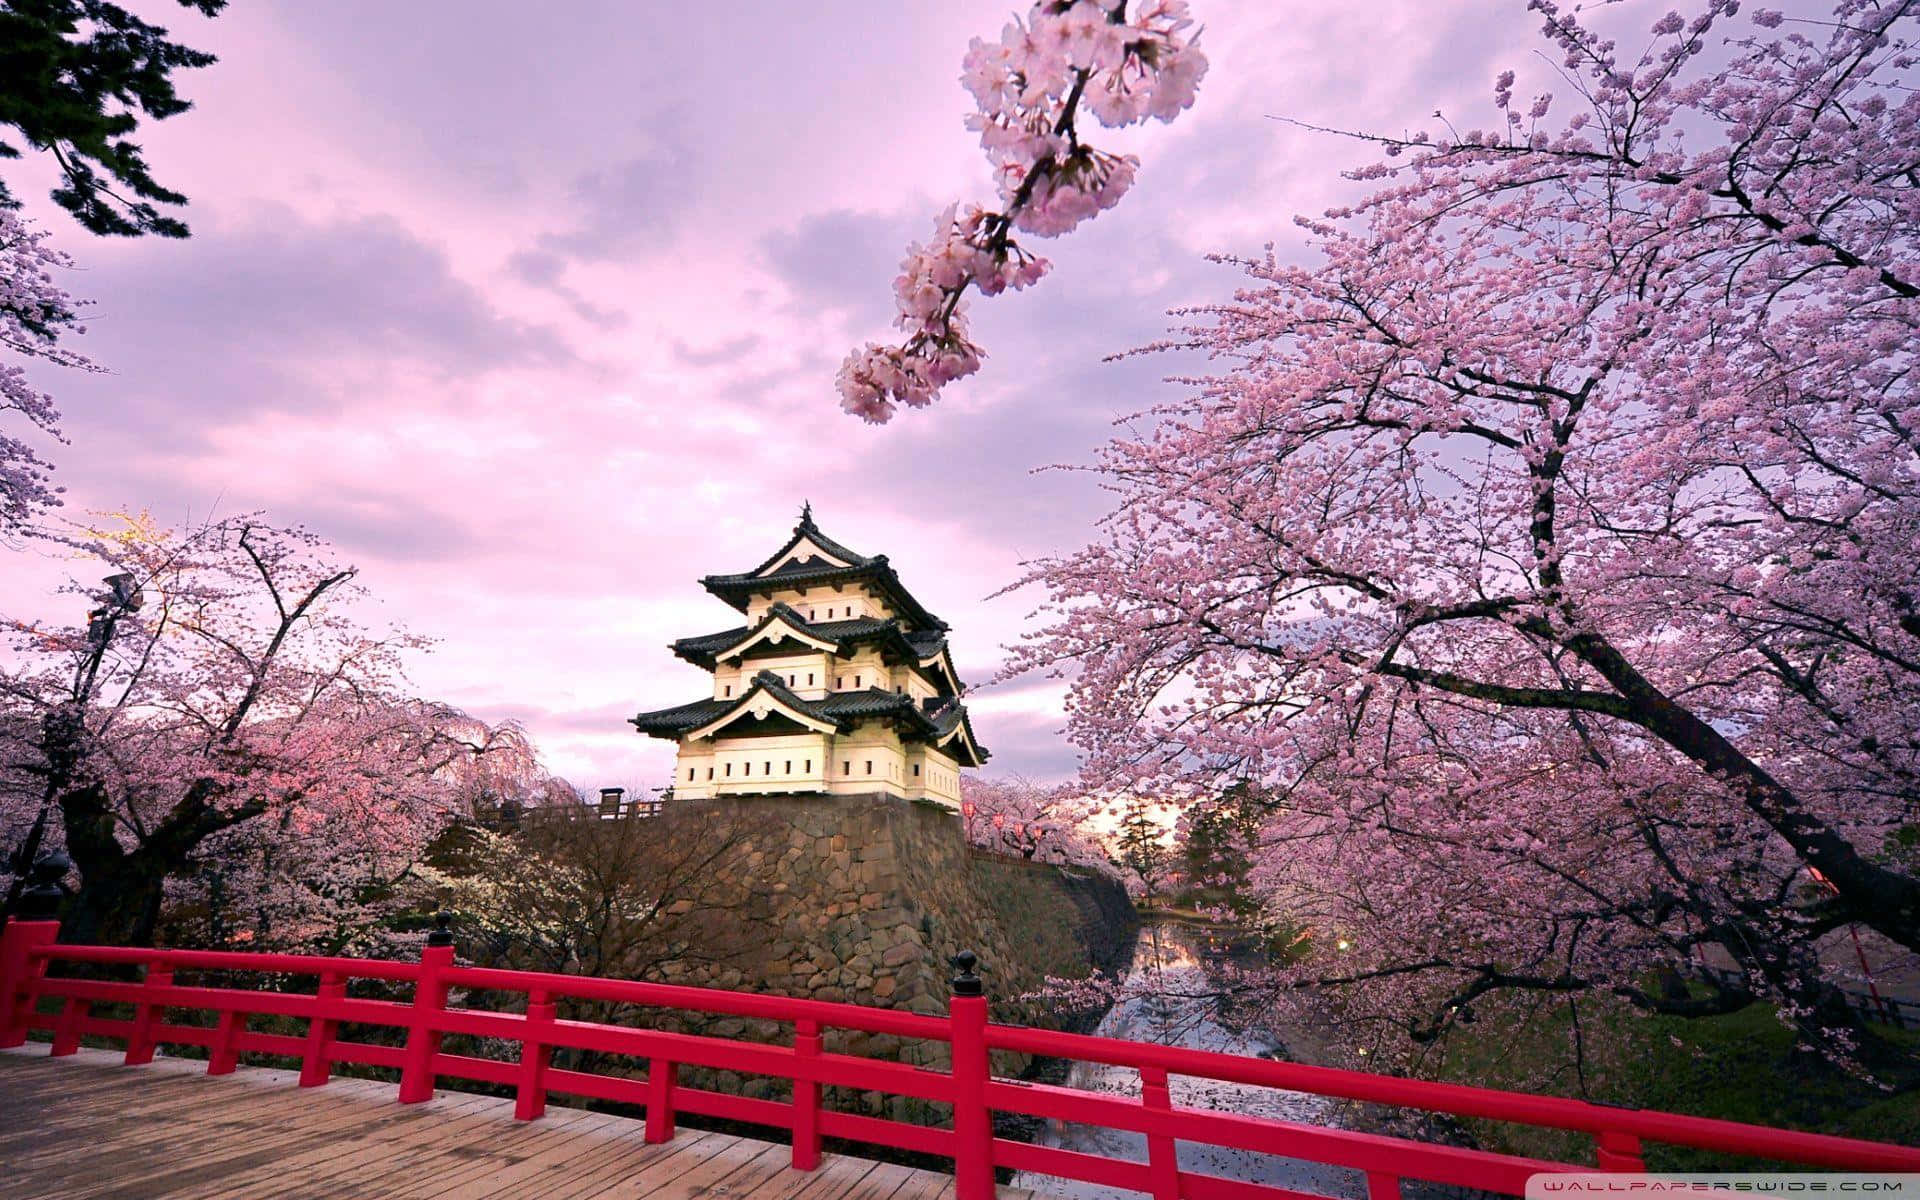 A vibrant burst of colors enveloping a picturesque Japanese Pink landscape. Wallpaper